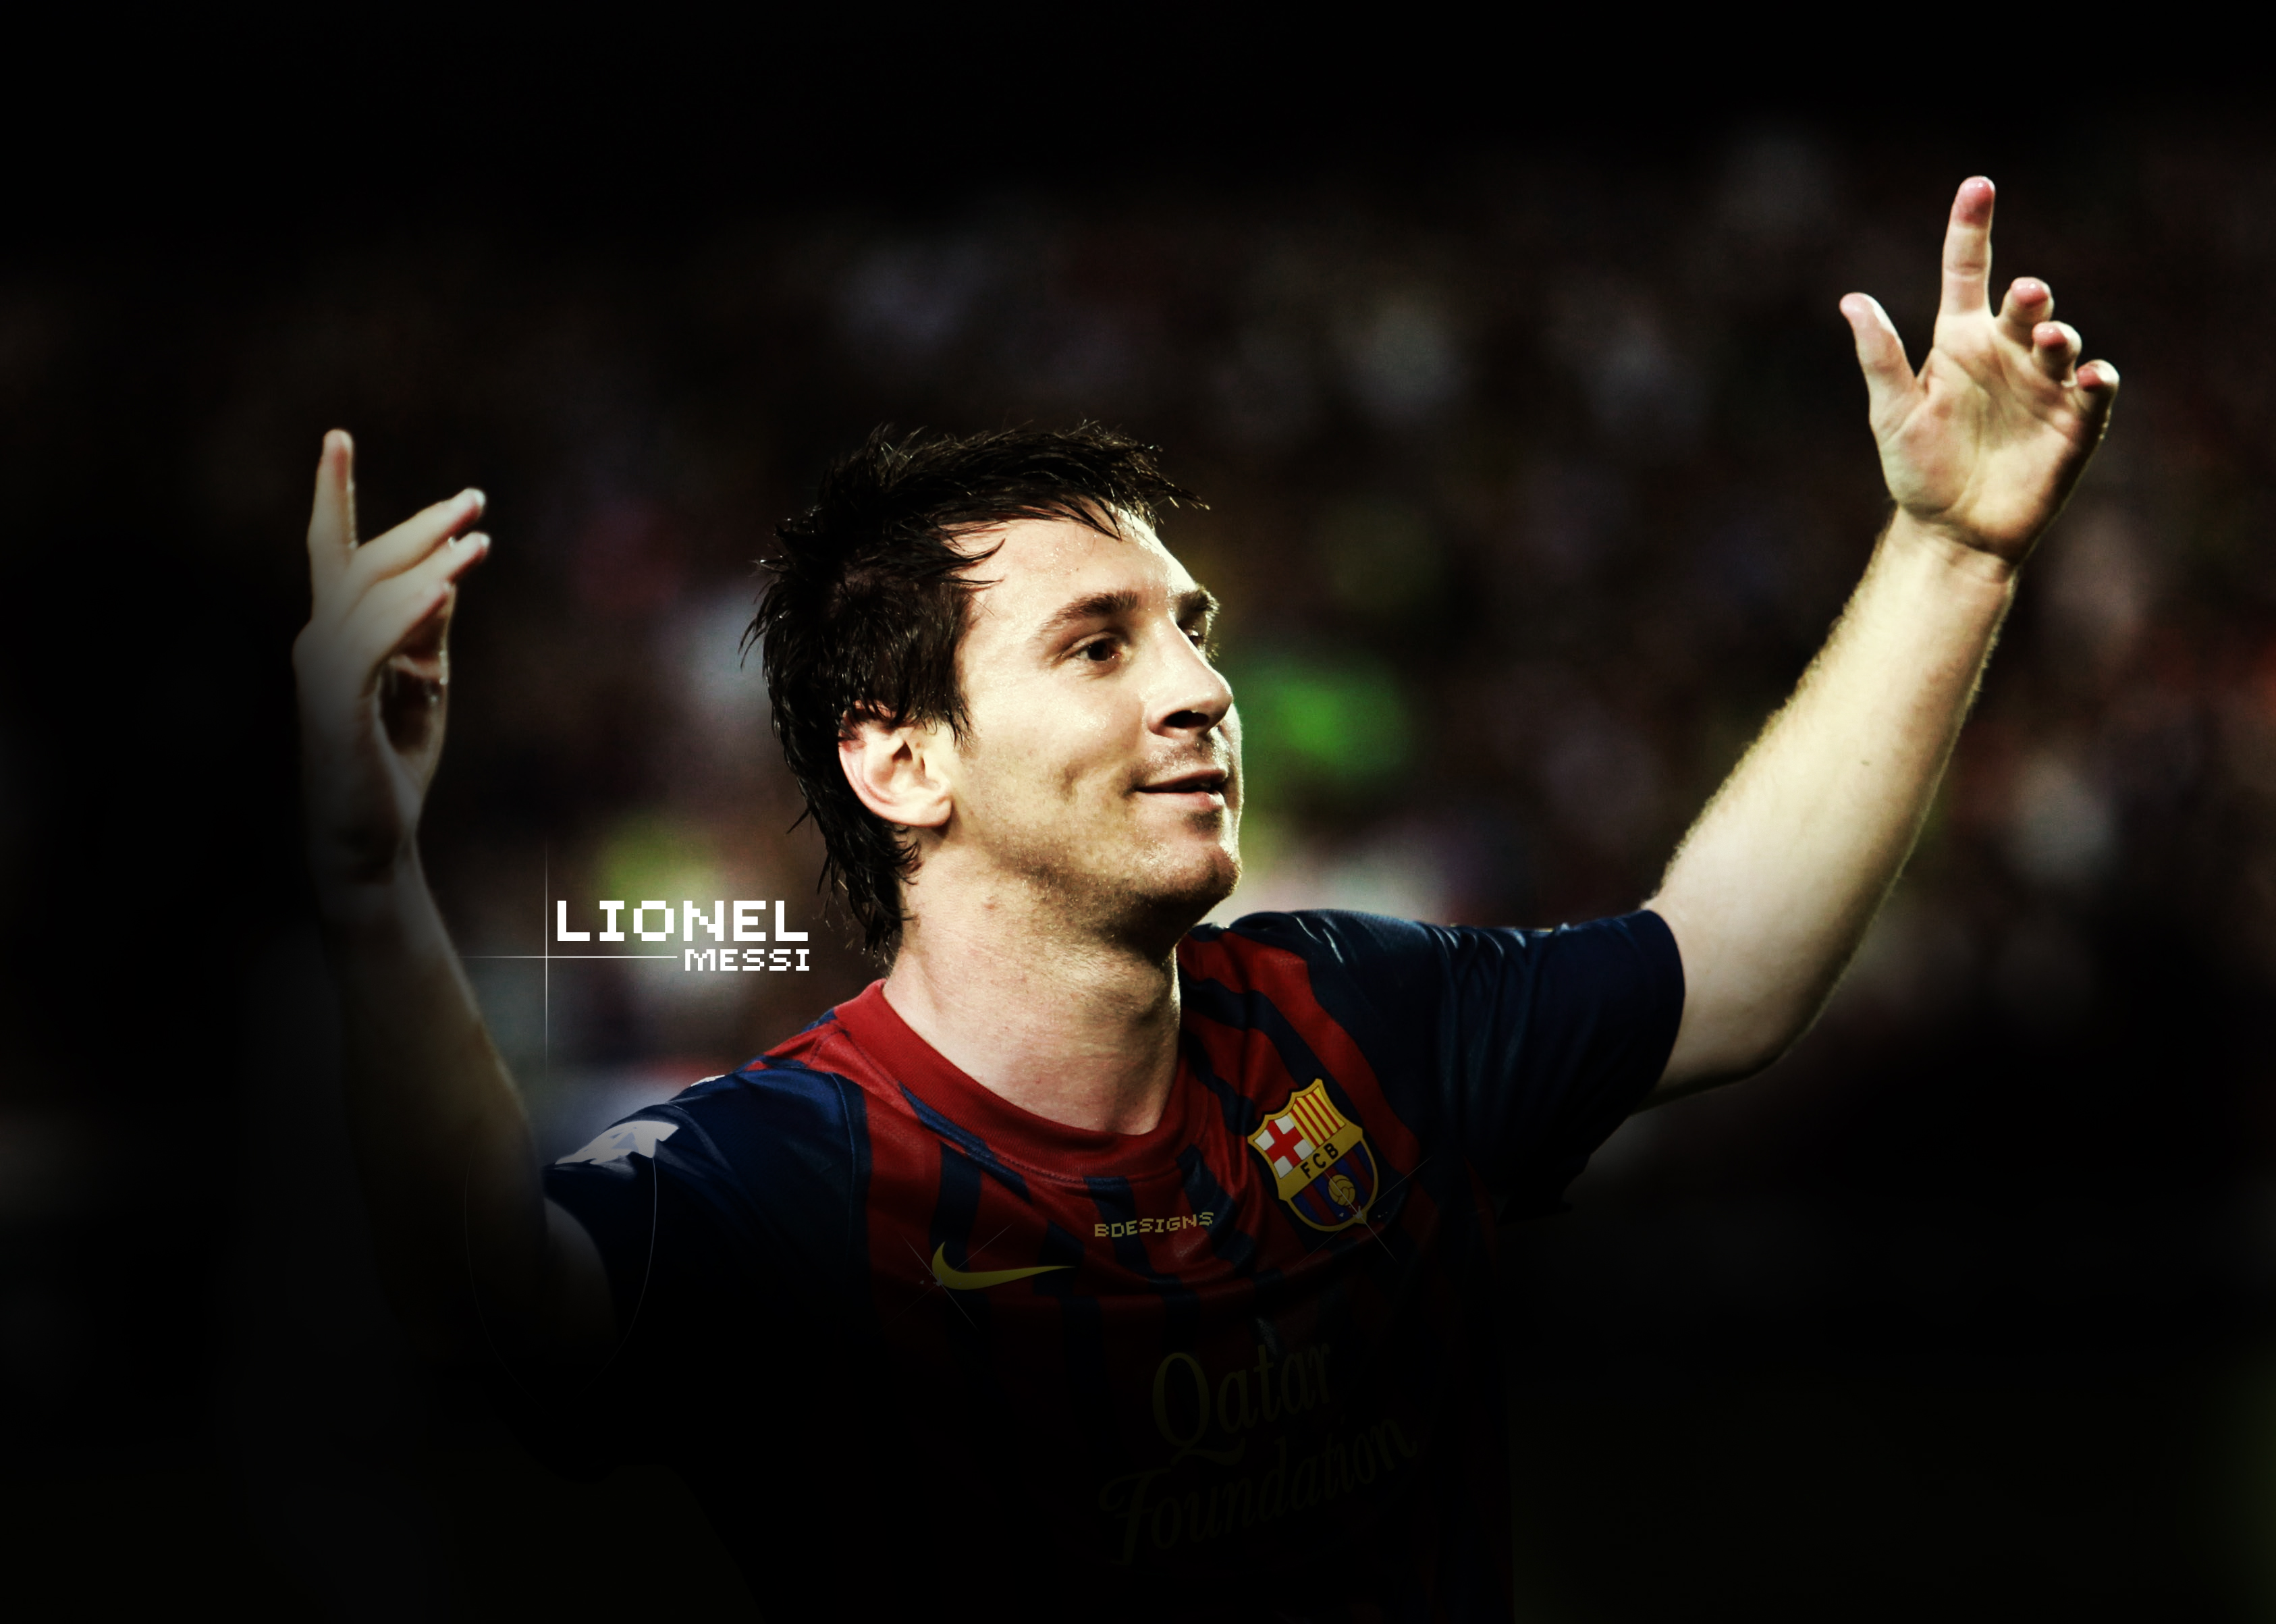 Lionel Messi Wallpaper Bdesigns